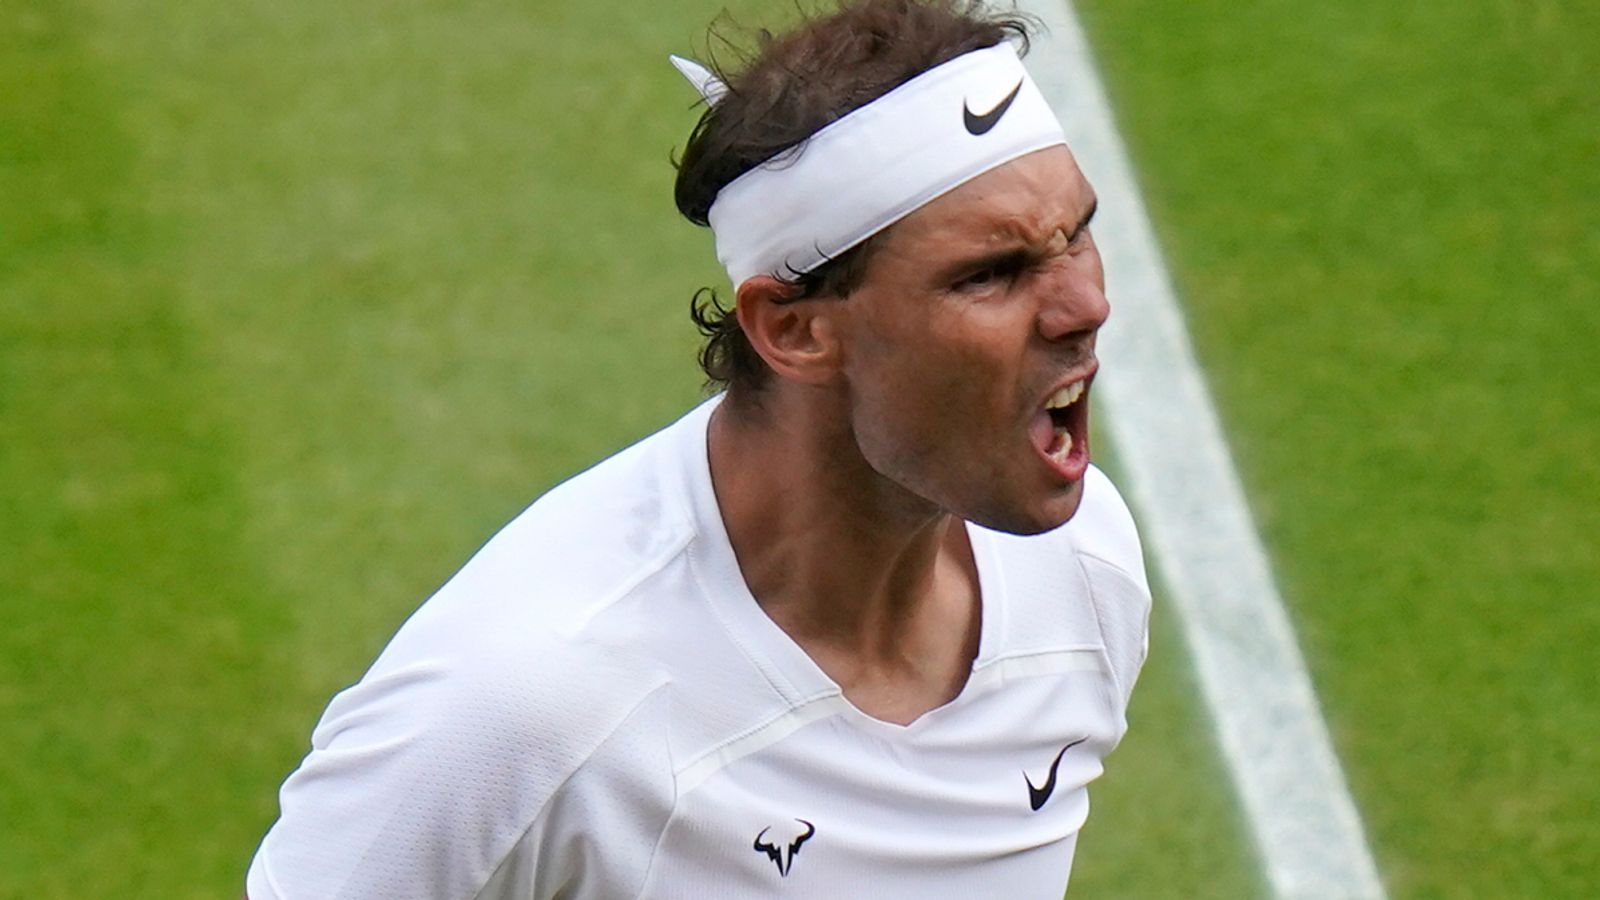 Wimbledon: Rafael Nadal overcomes injury to beat Taylor Fritz in five-set quarter-final thriller